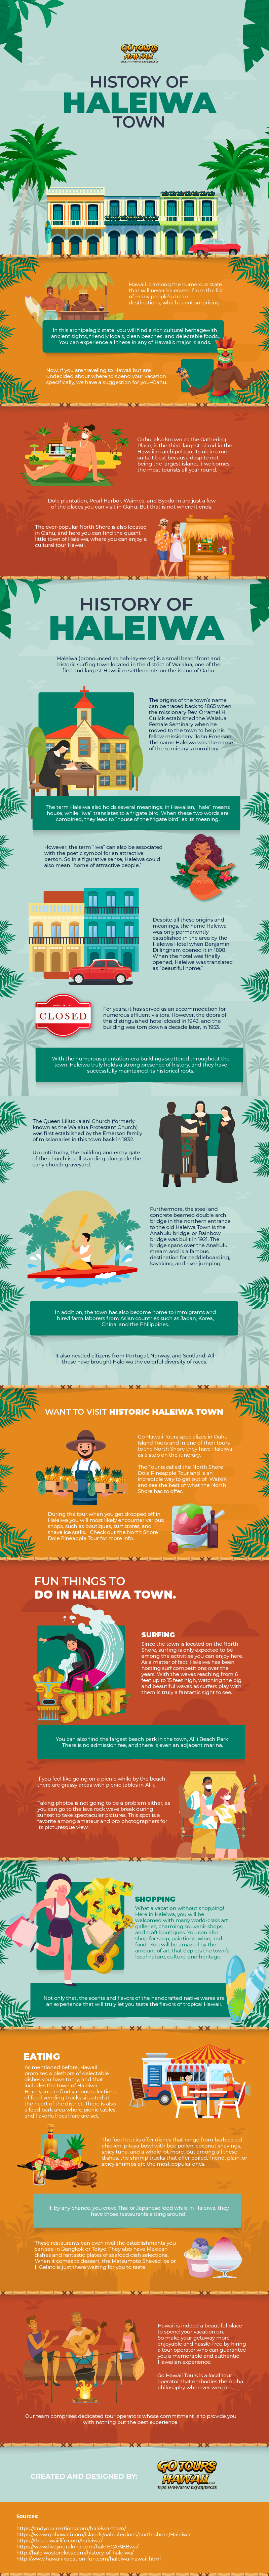 History of Haleiwa Town - Infographic ImageDAIW@&*632